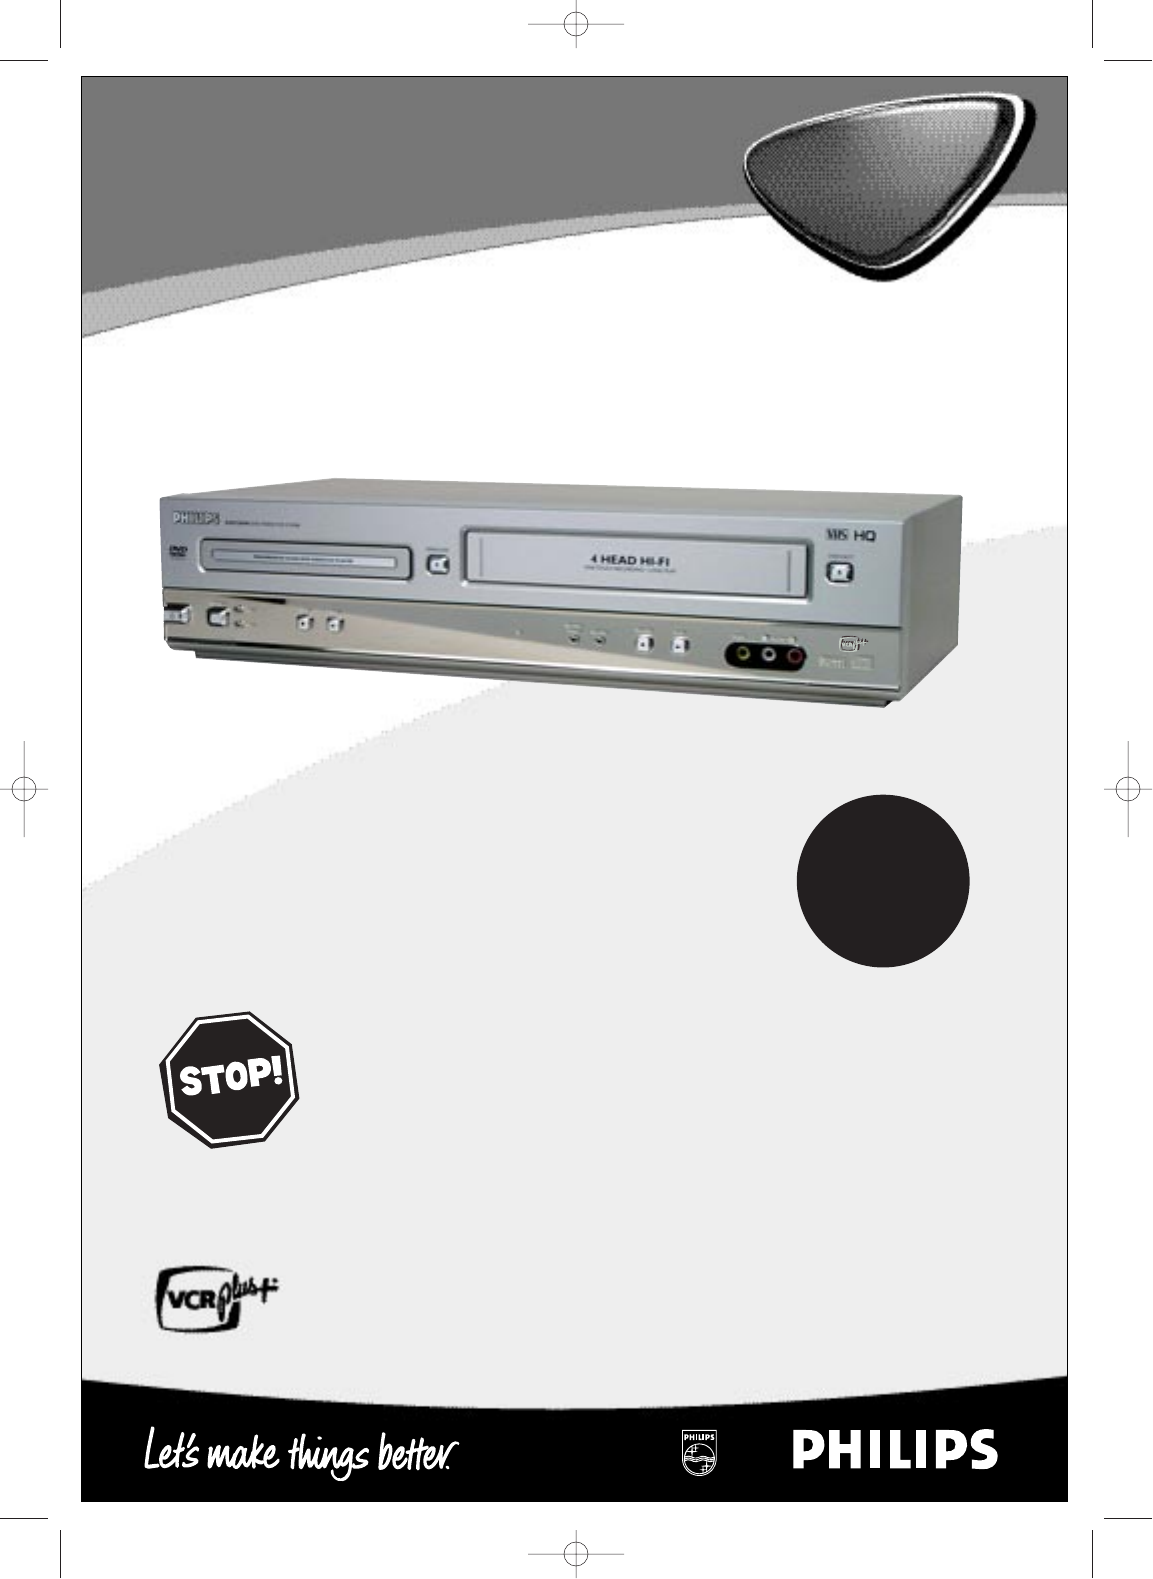 Philips DVD VCR Combo DVD750VR User Guide | ManualsOnline.com